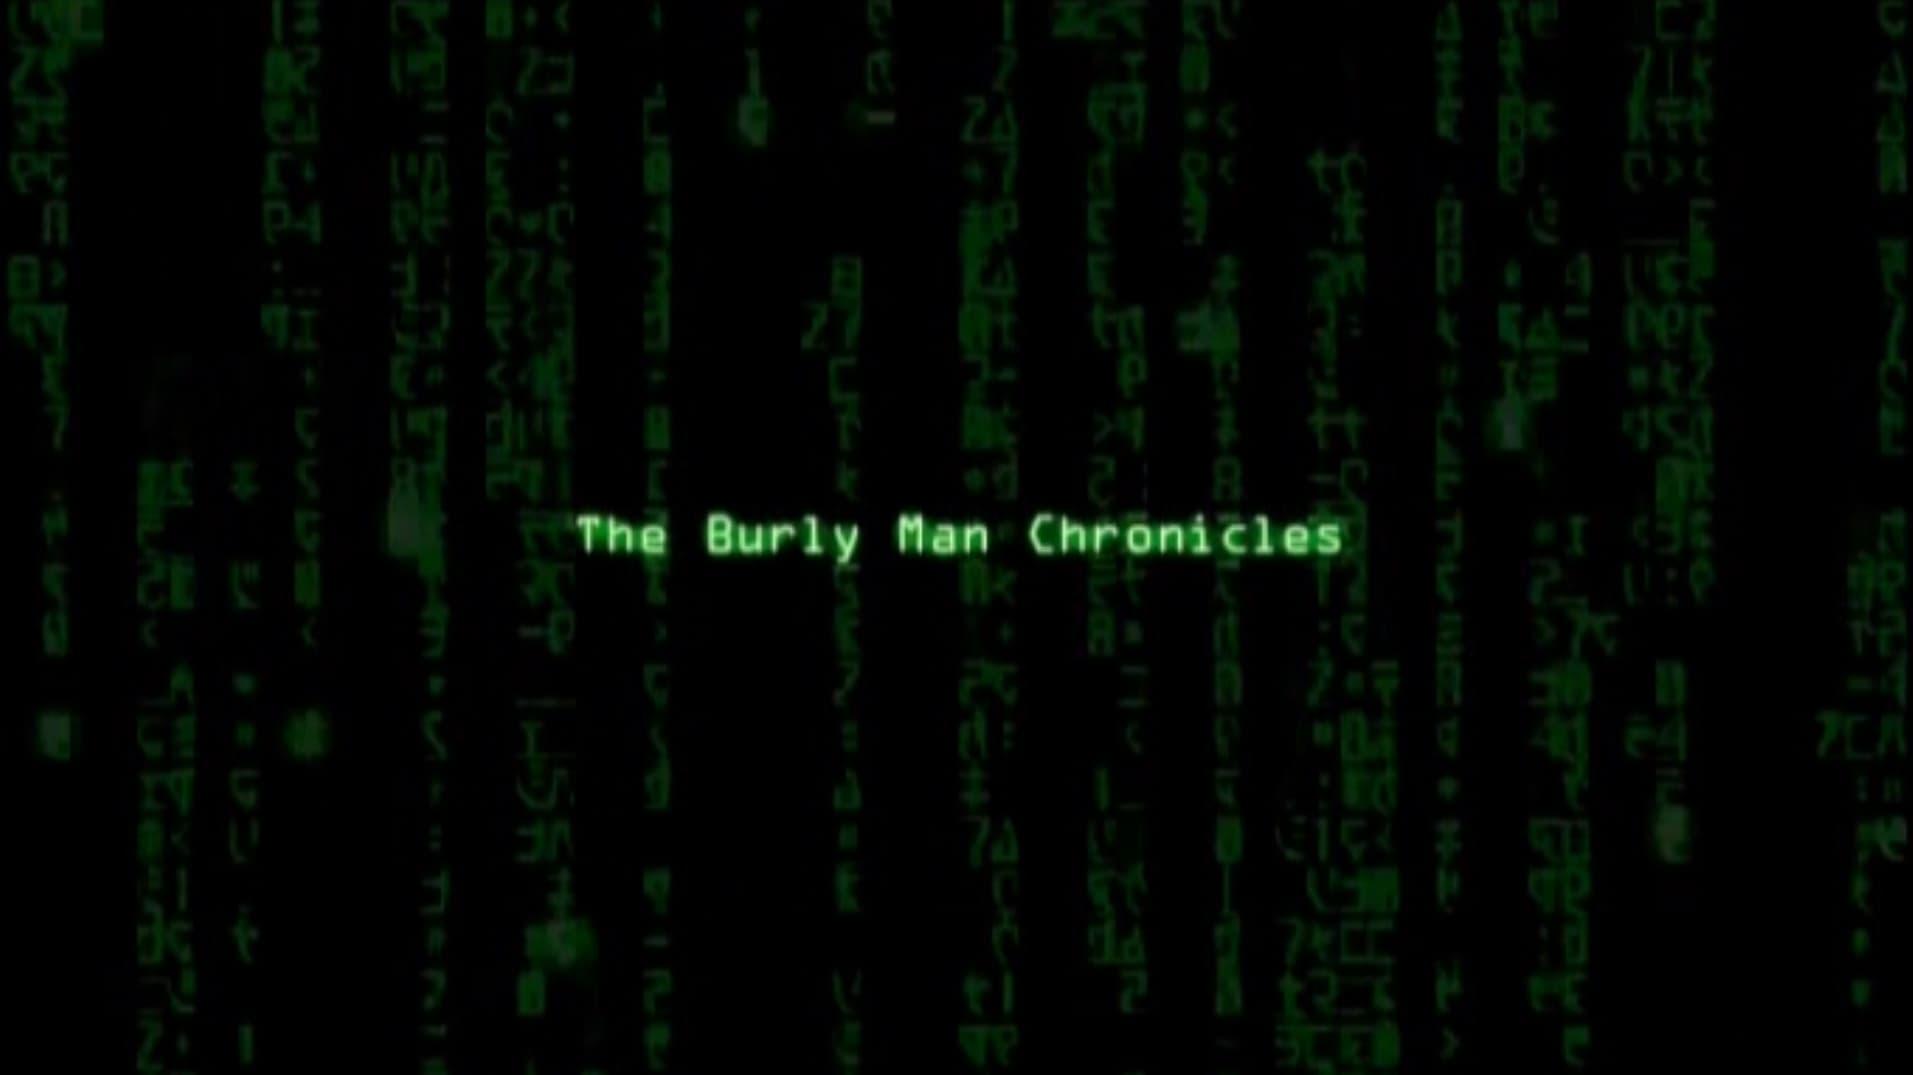 The Burly Man Chronicles backdrop